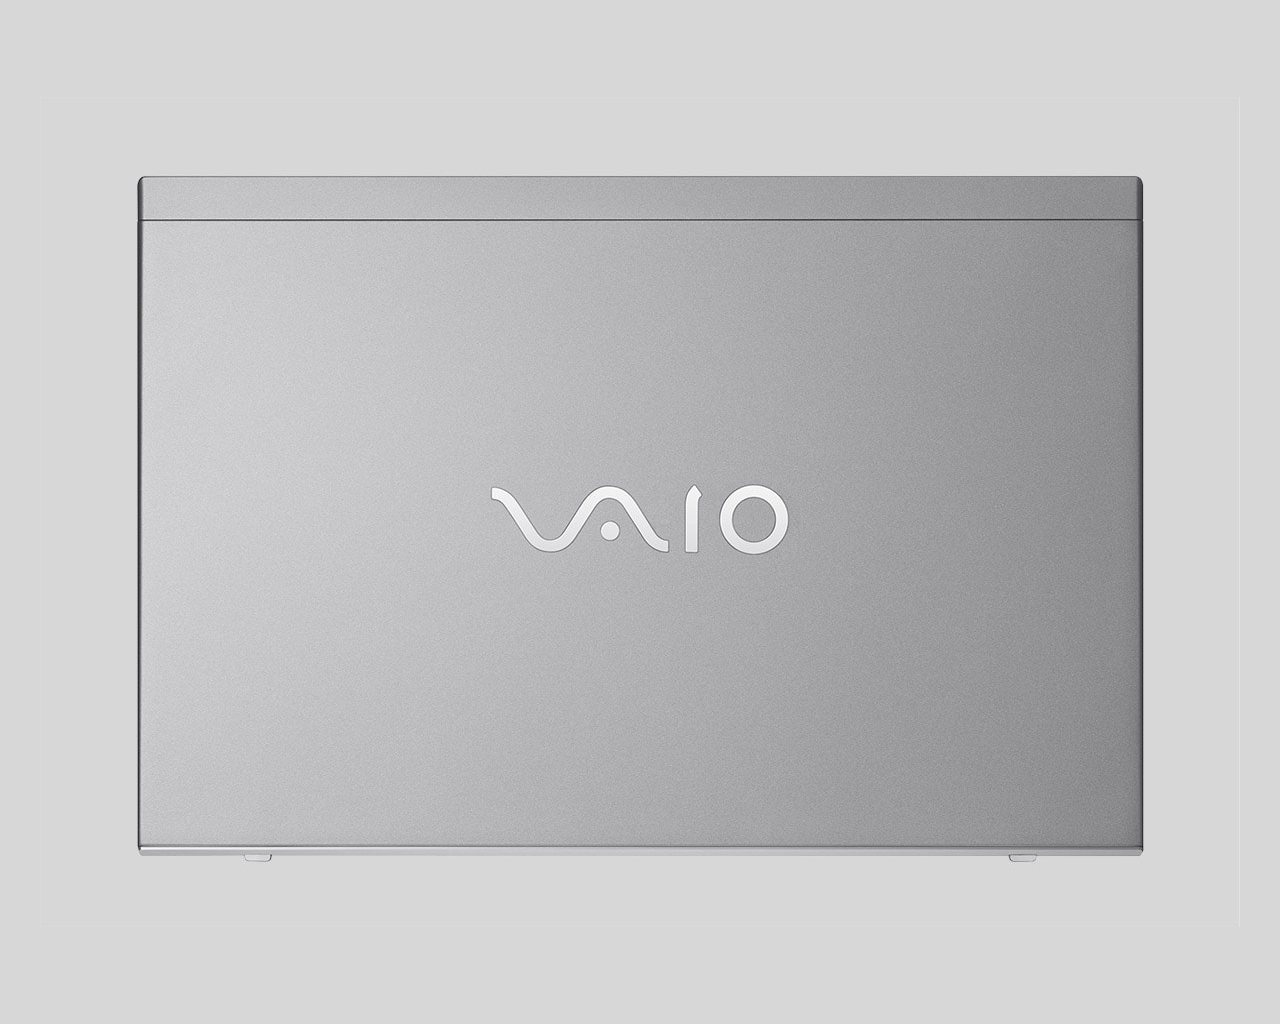 Sony Vaio S11-VJS1121 - Notebookcheck.net External Reviews